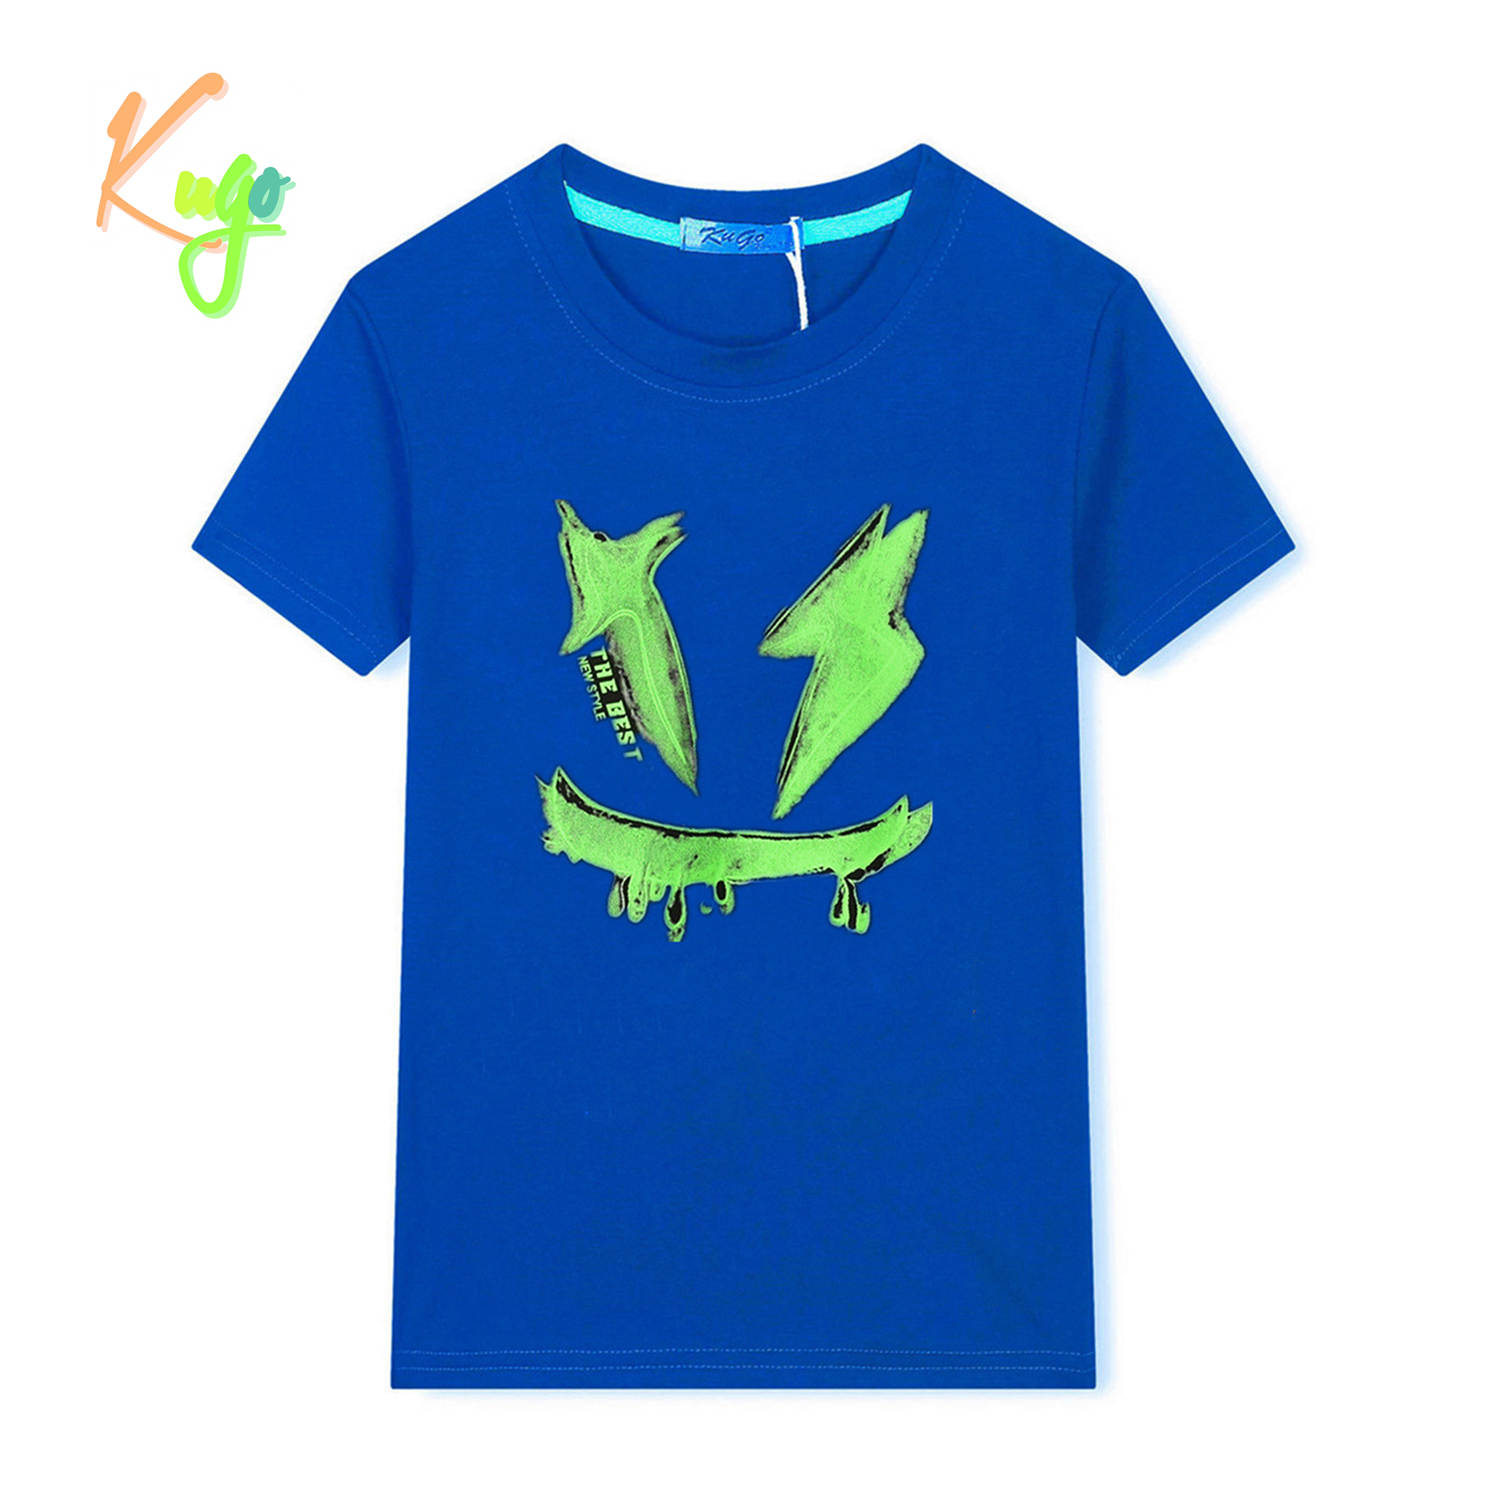 Chlapecké tričko - KUGO HC9292, modrá Barva: Modrá, Velikost: 146